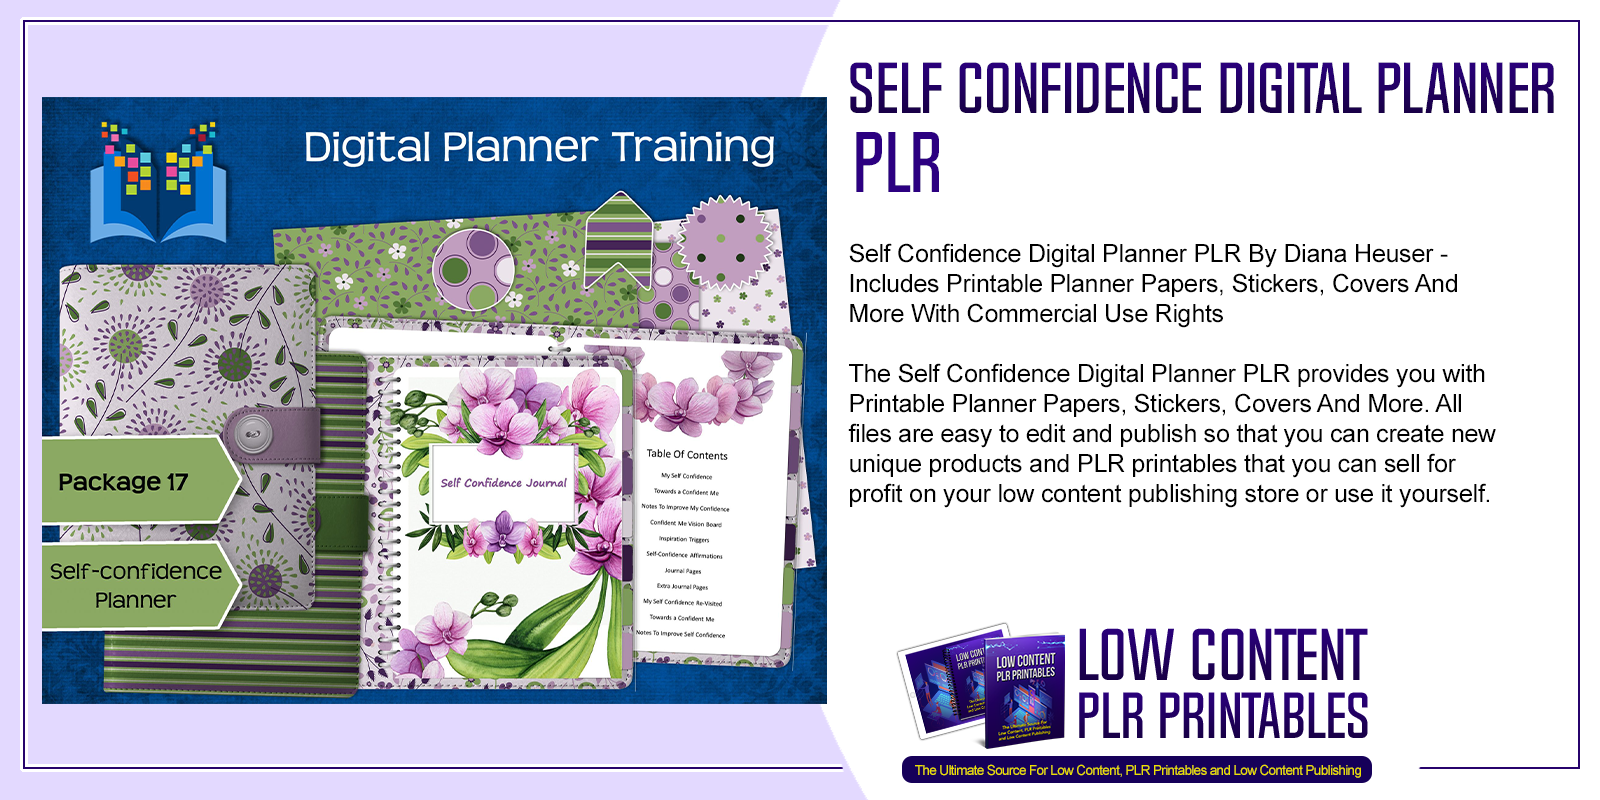 Self Confidence Digital Planner PLR